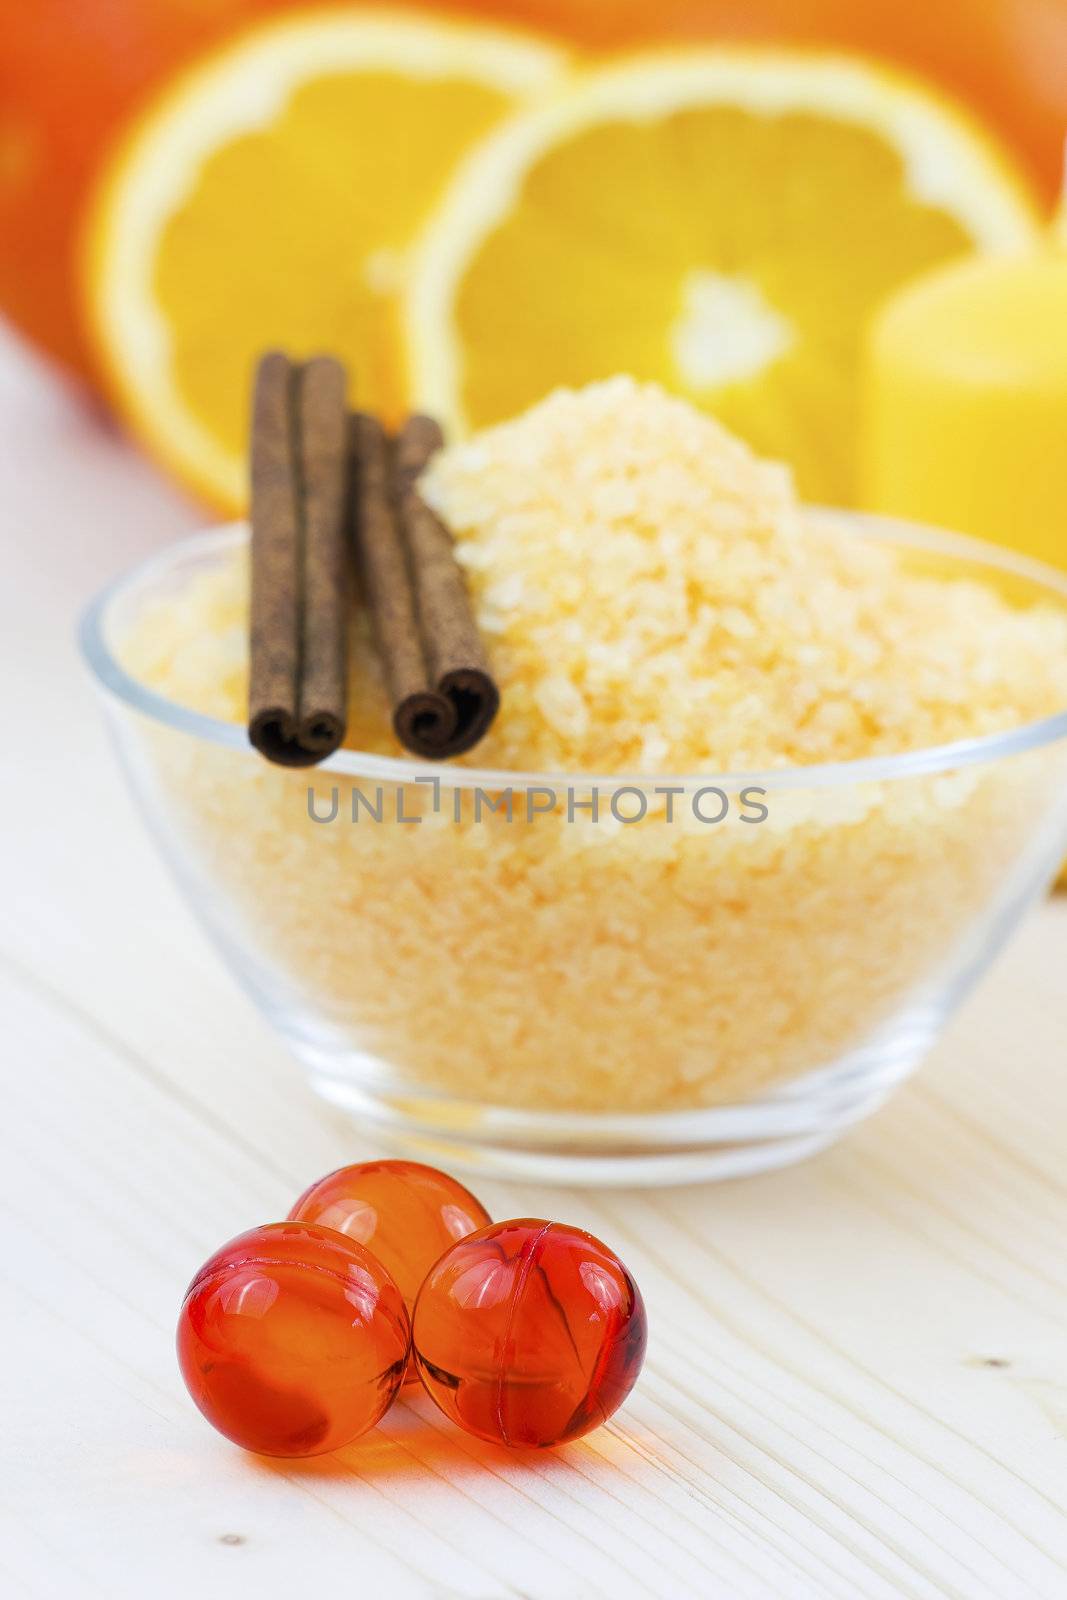 bowl of orange bath salt with fresh fruits - beauty treatment